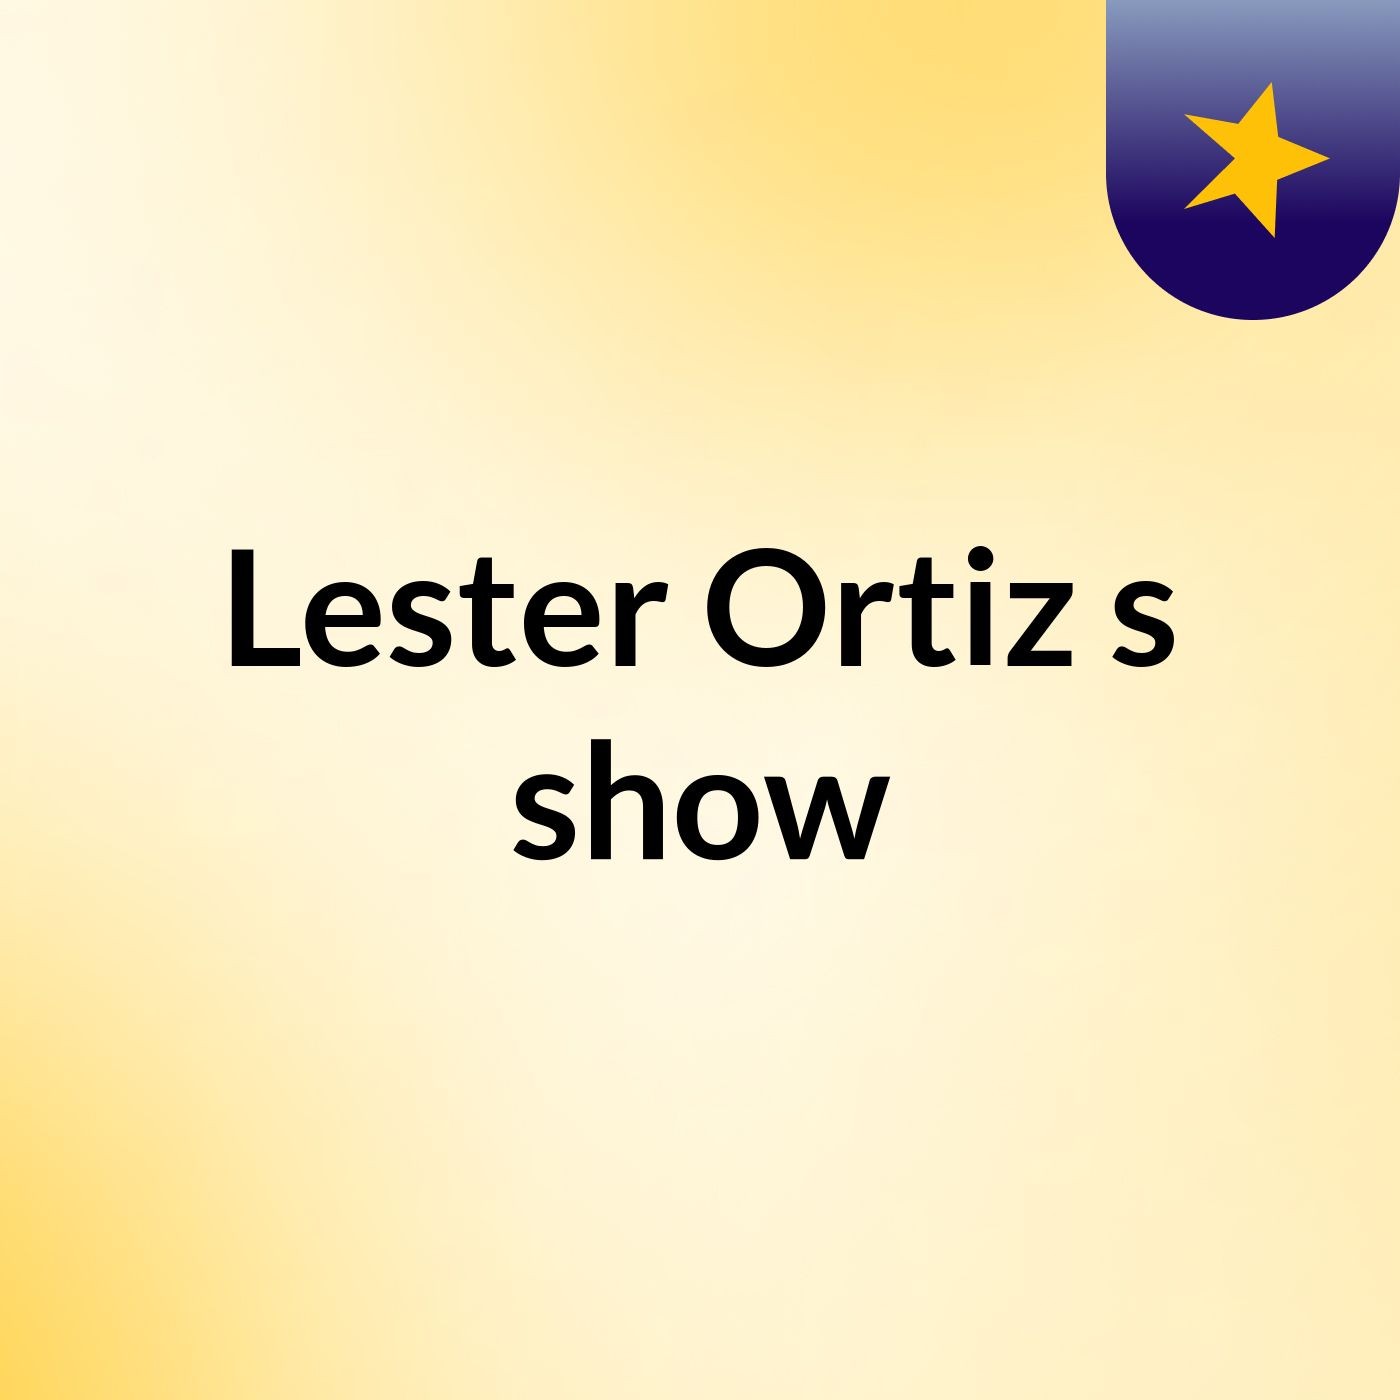 Lester Ortiz's show